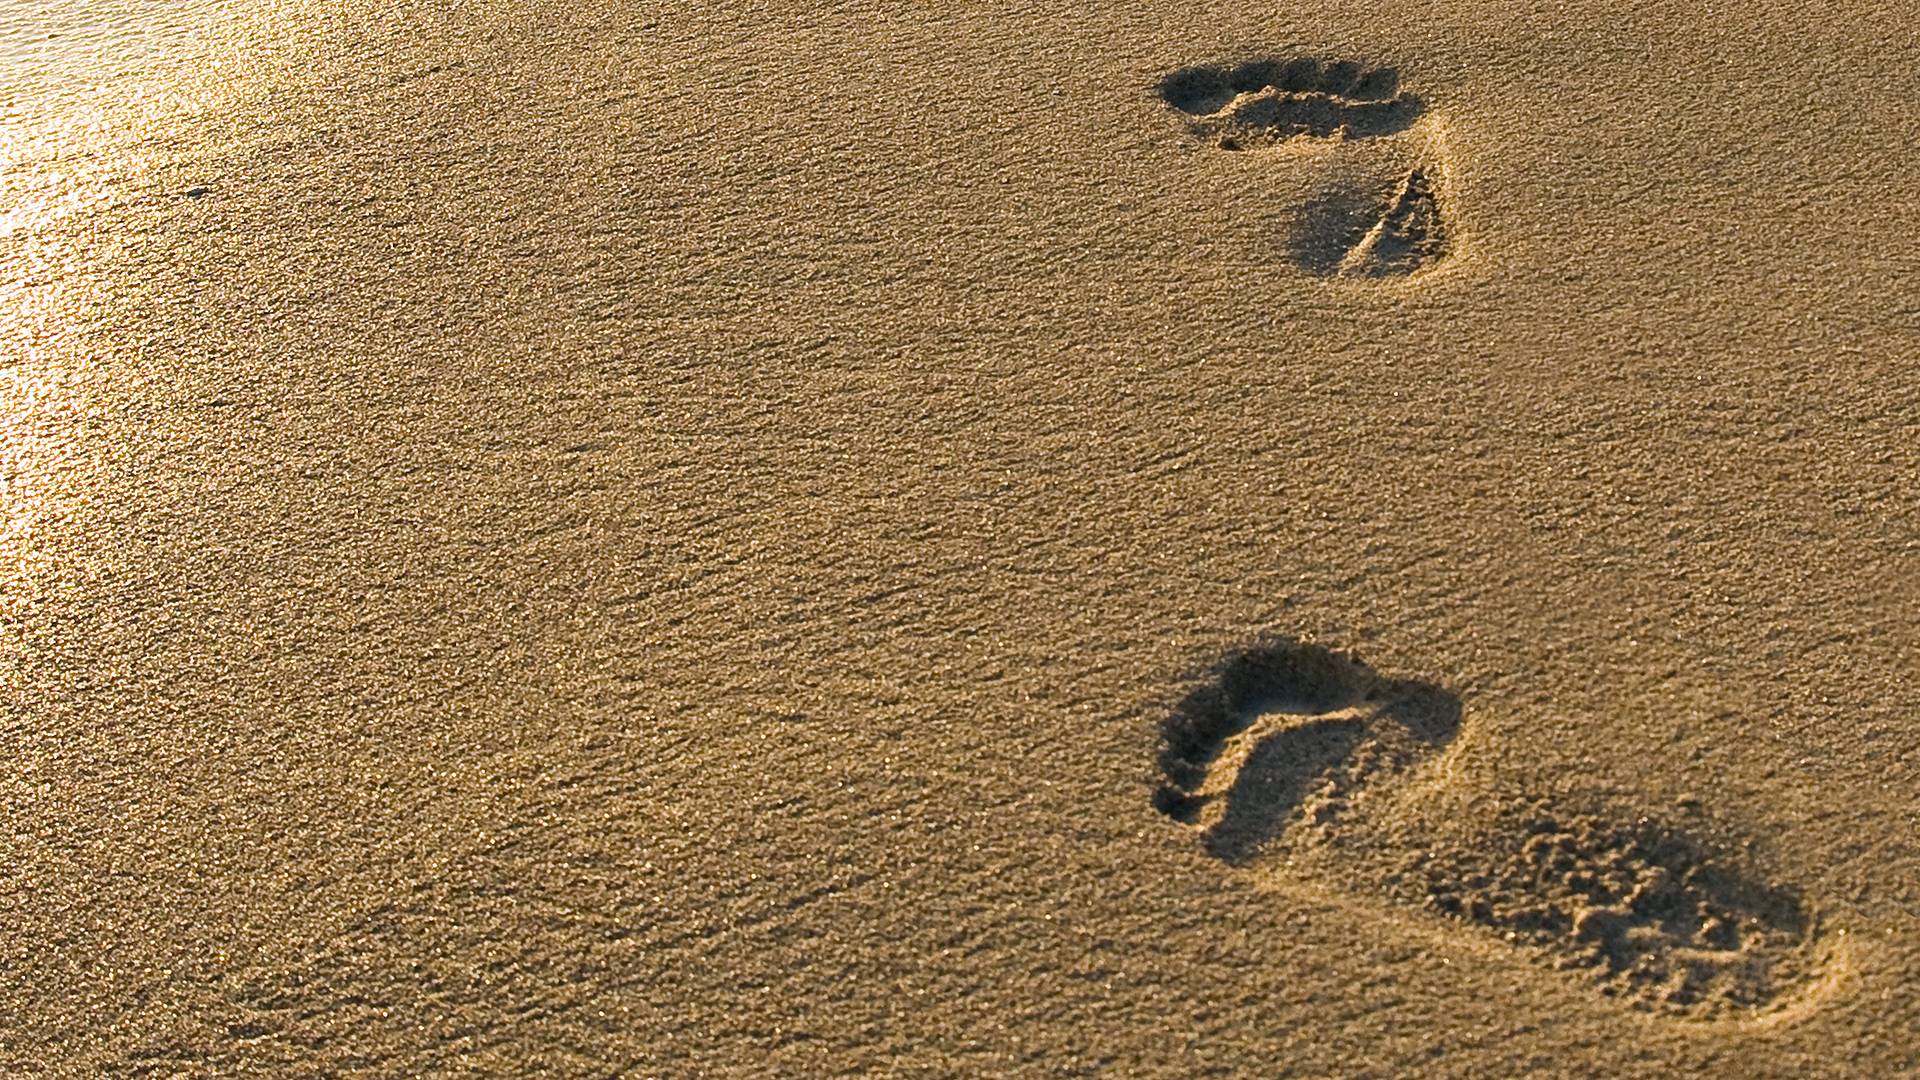 Footprints In Sand Wallpaper Desktop Wallpaper High resolution